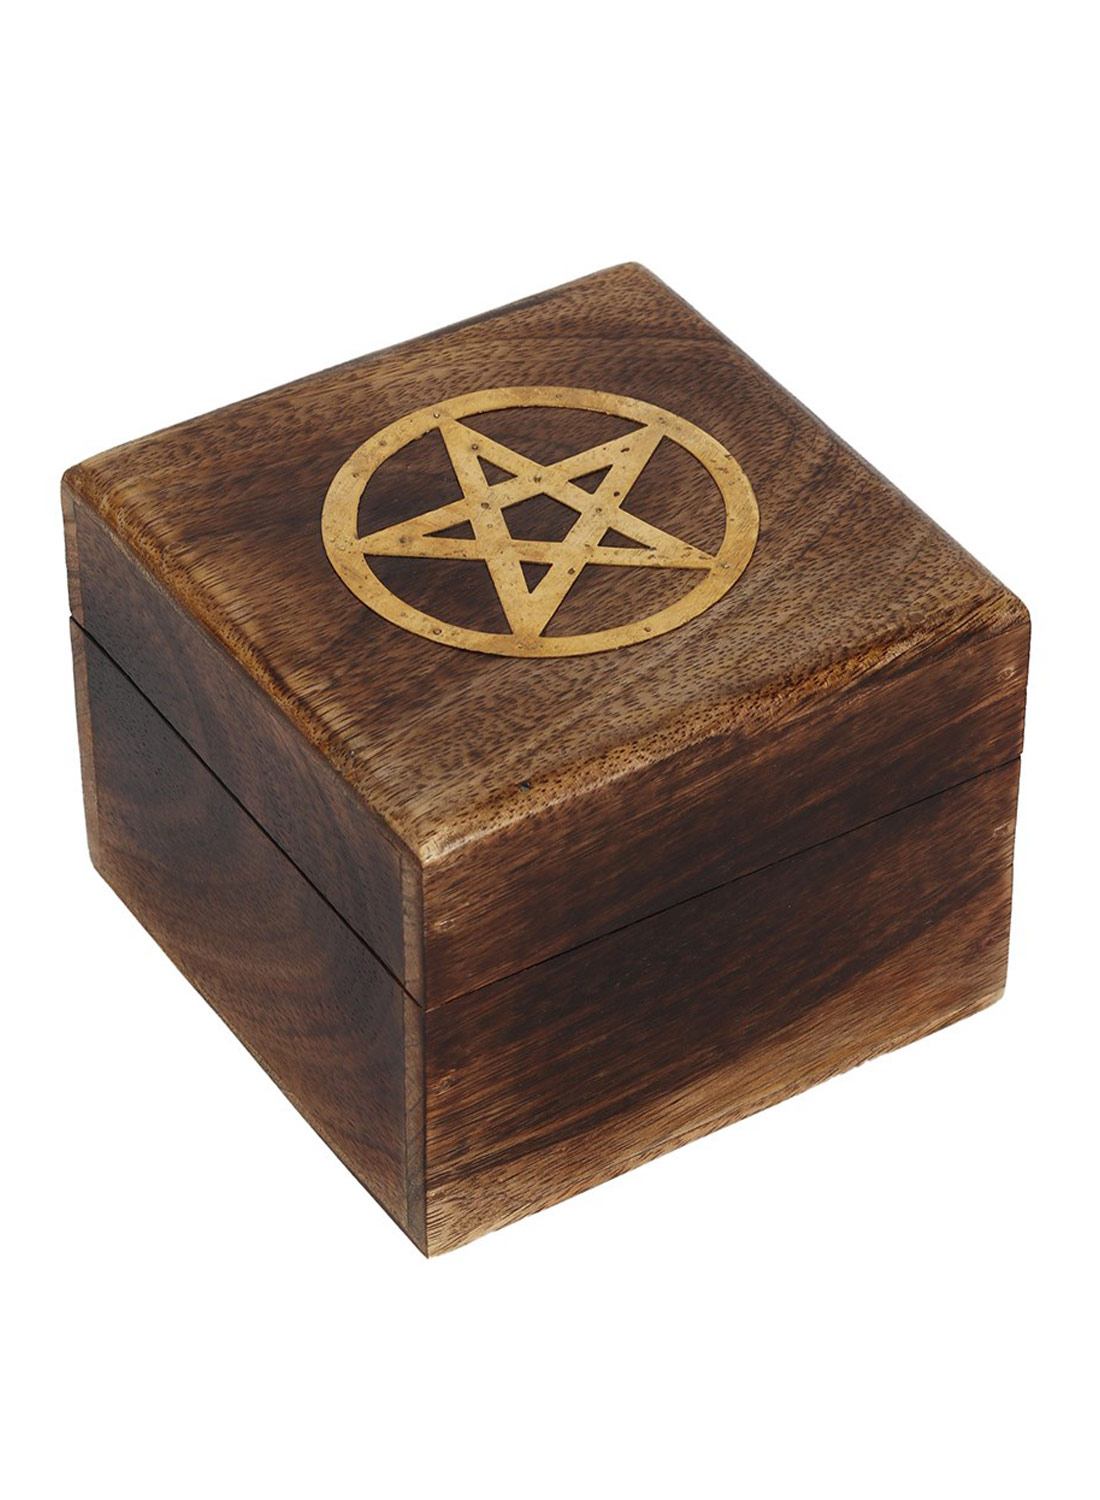 Pentagram Wooden Box